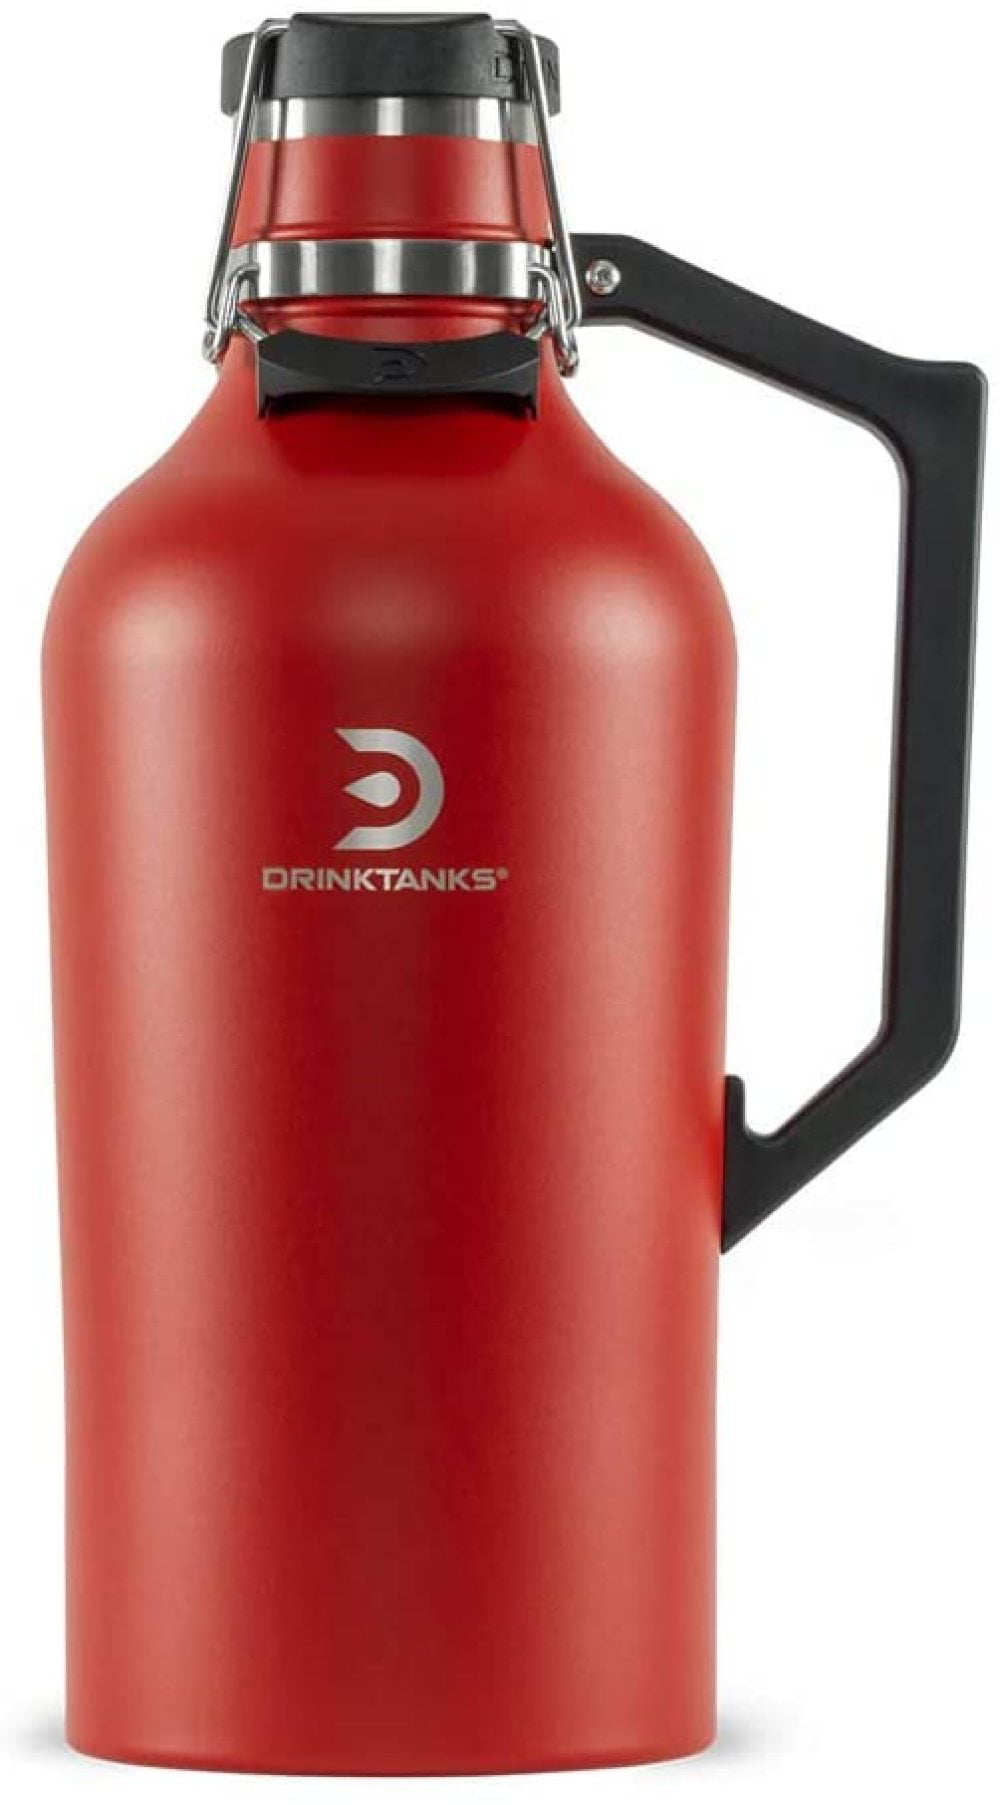 DrinkTanks New Insulated 128 oz Growler G-2.0-128-COP